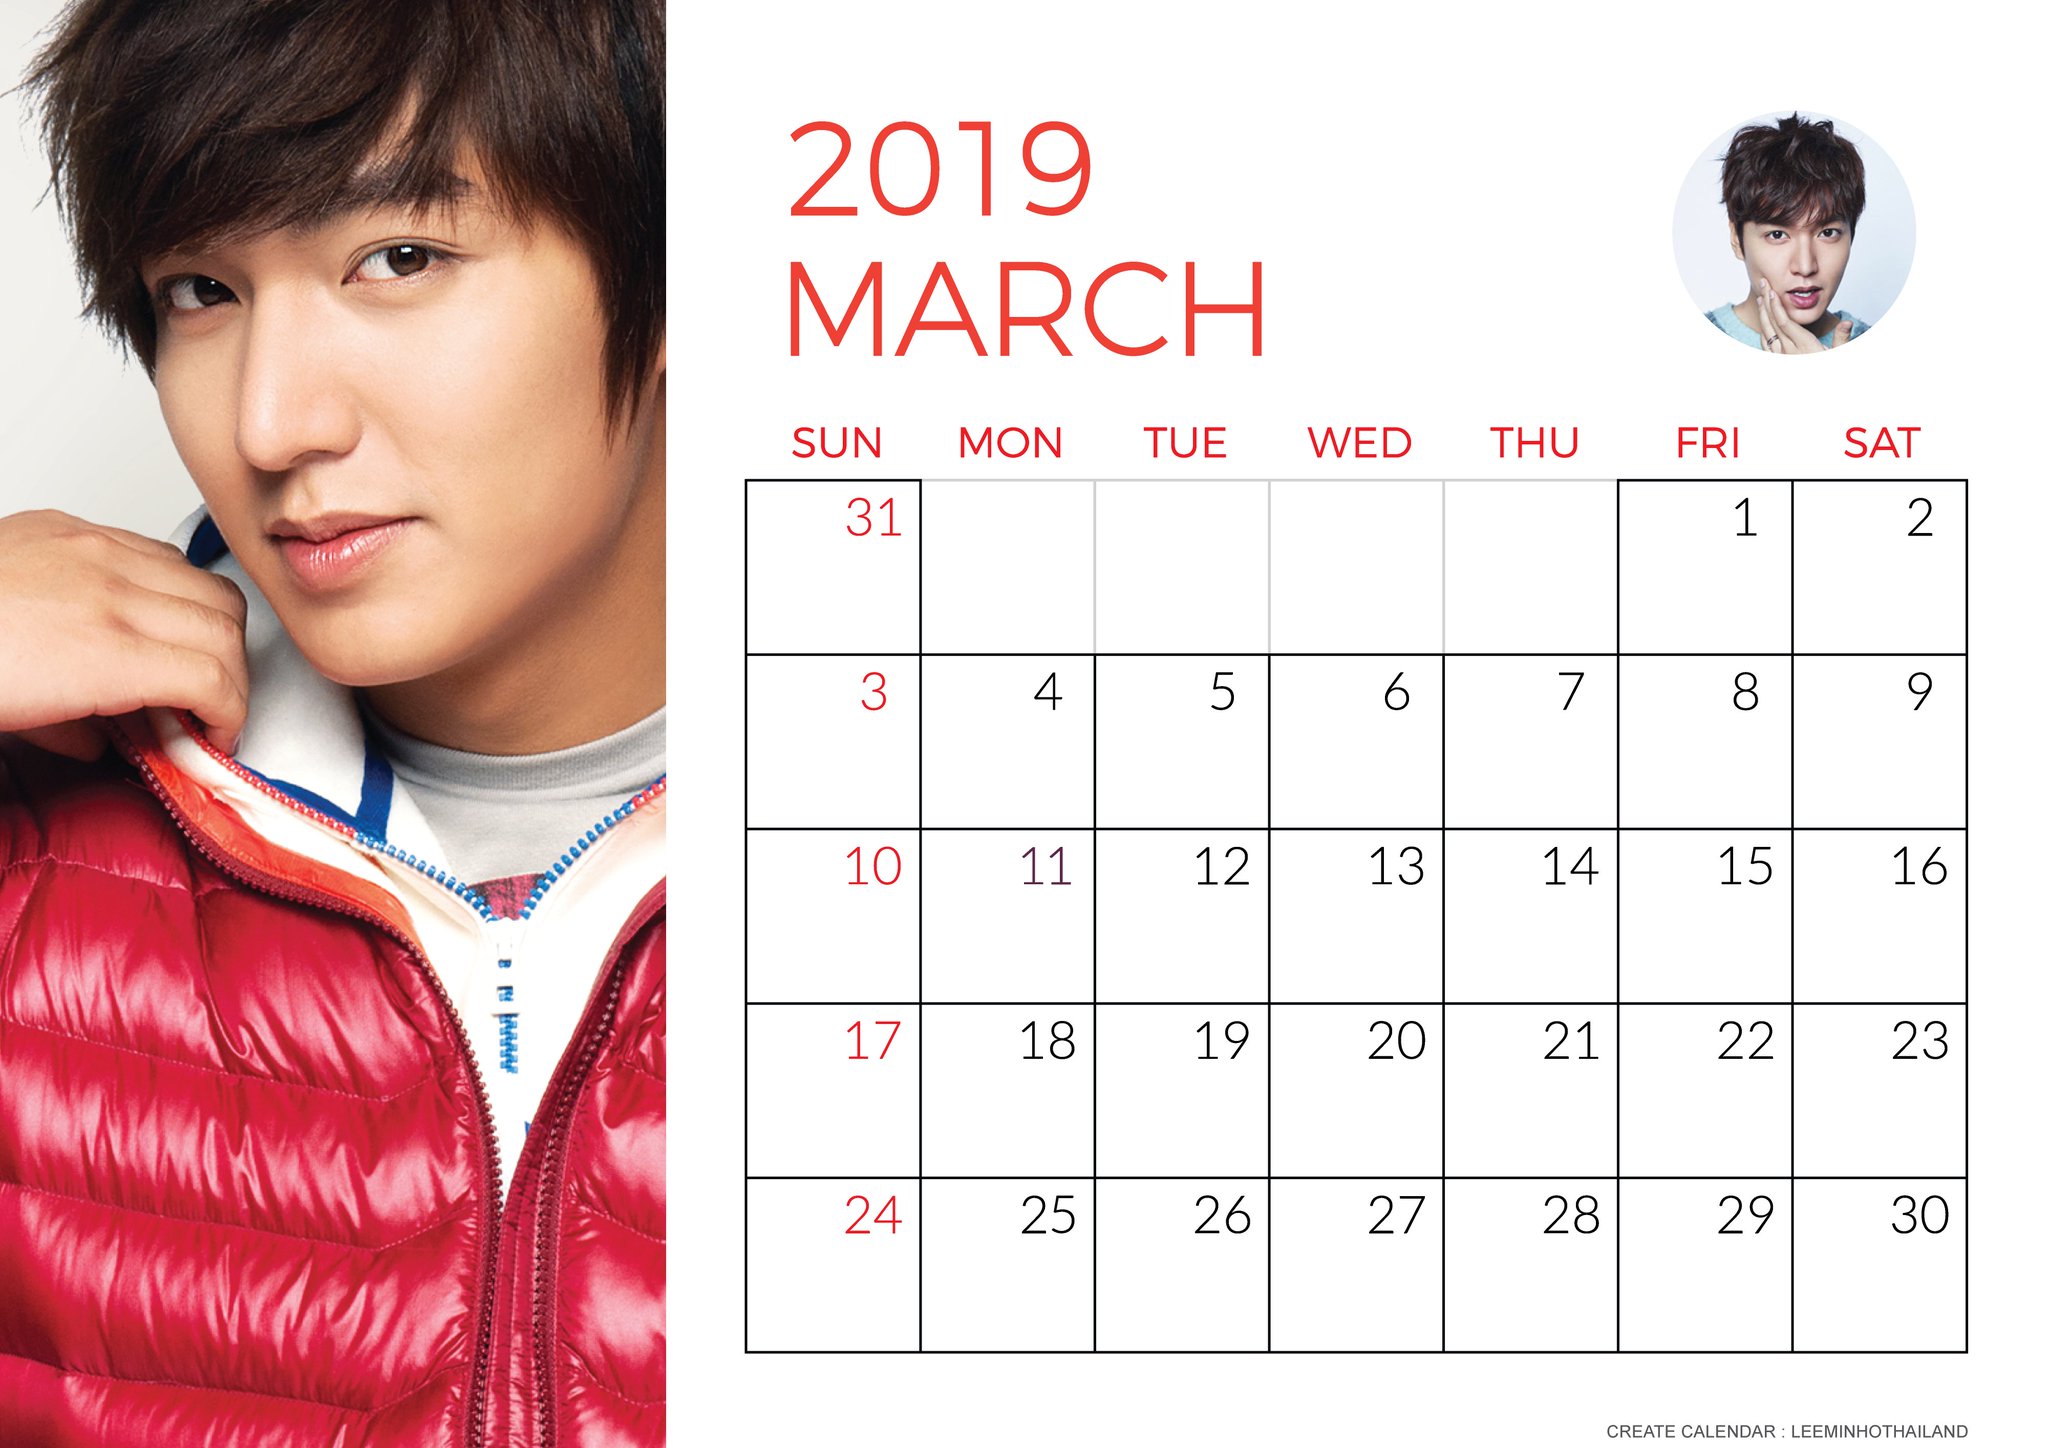 LEEMINHOTHAILAND on Twitter "[PHOTO] Lee Min Ho Calendar March 2019